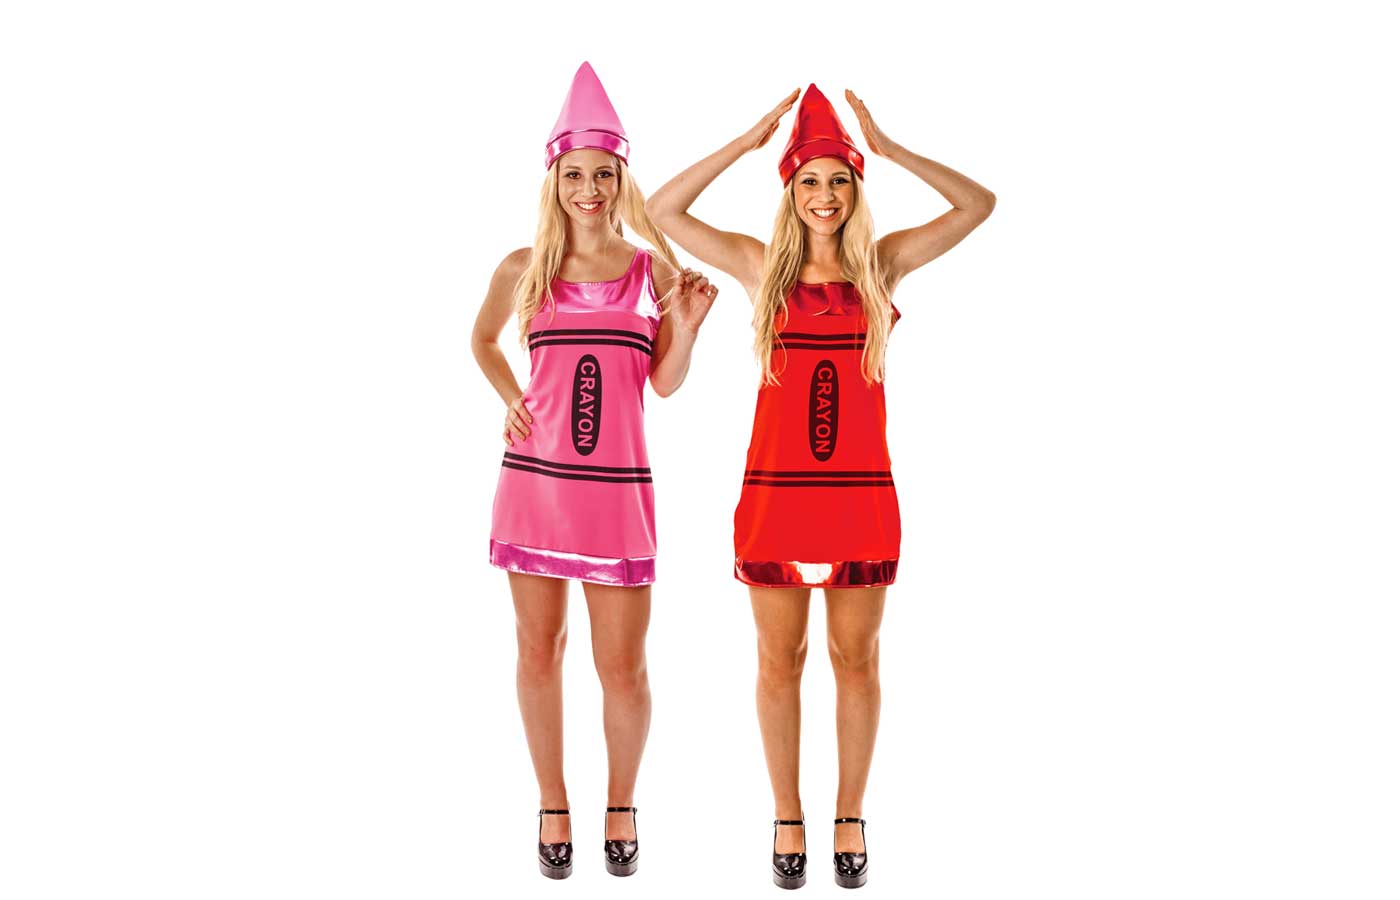 Crayon costumes